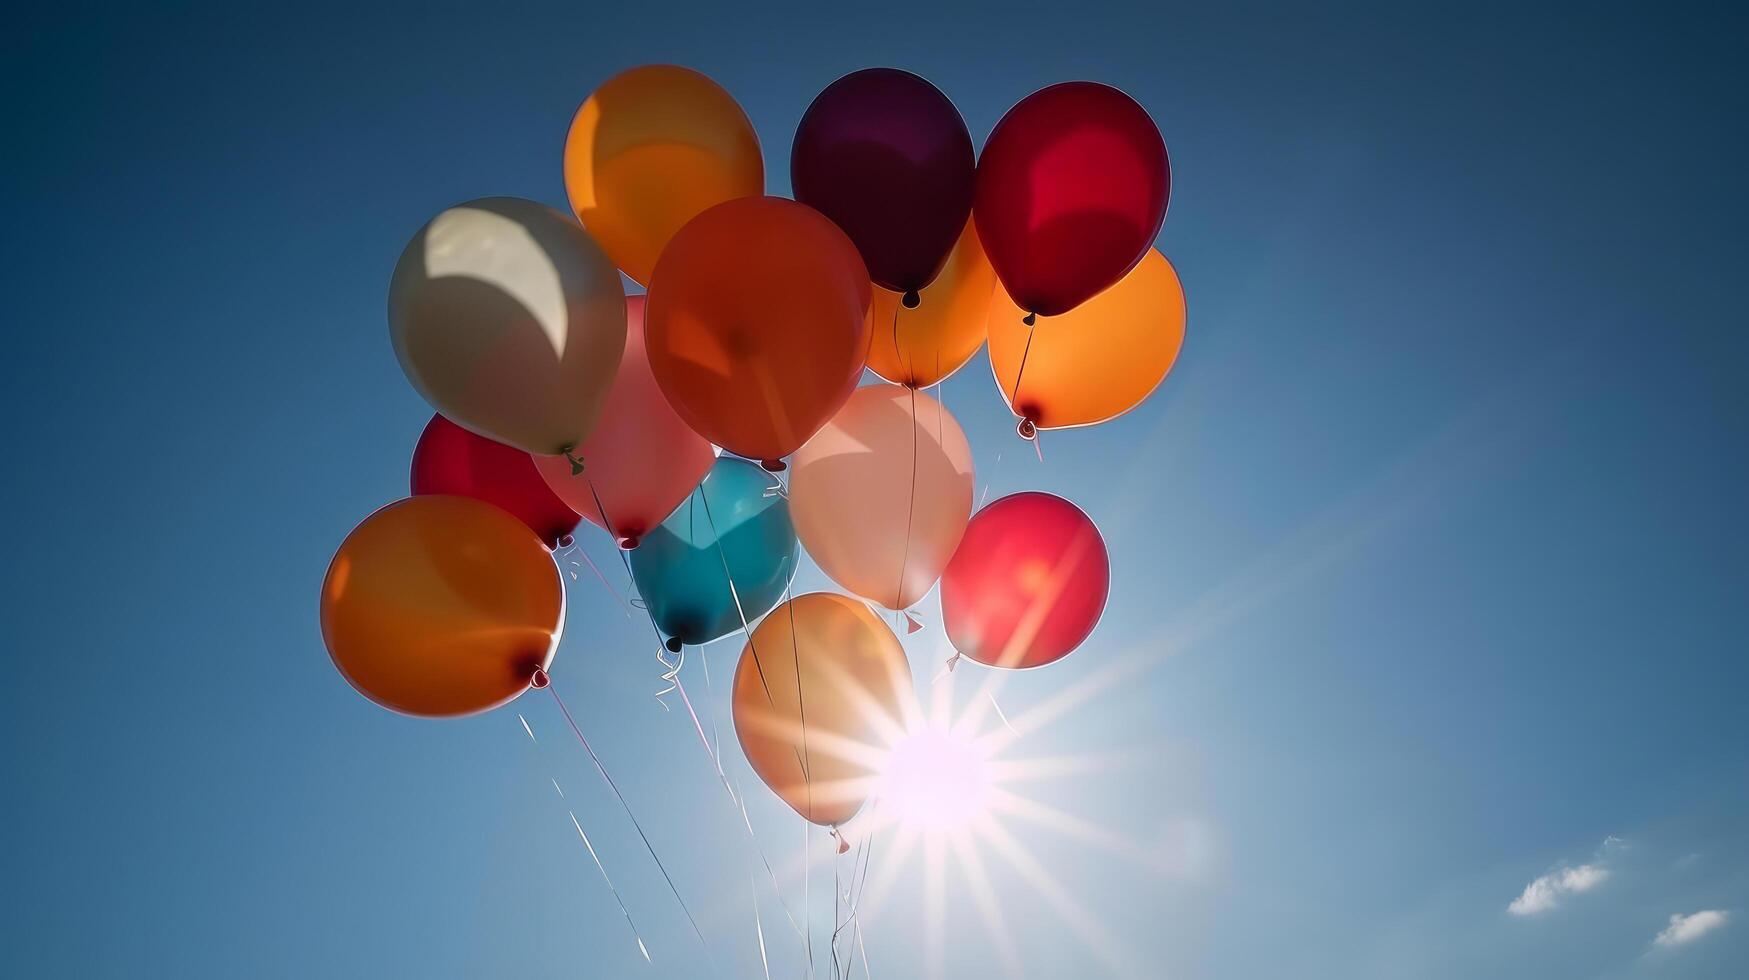 Balloons in blue sky. Illustration photo